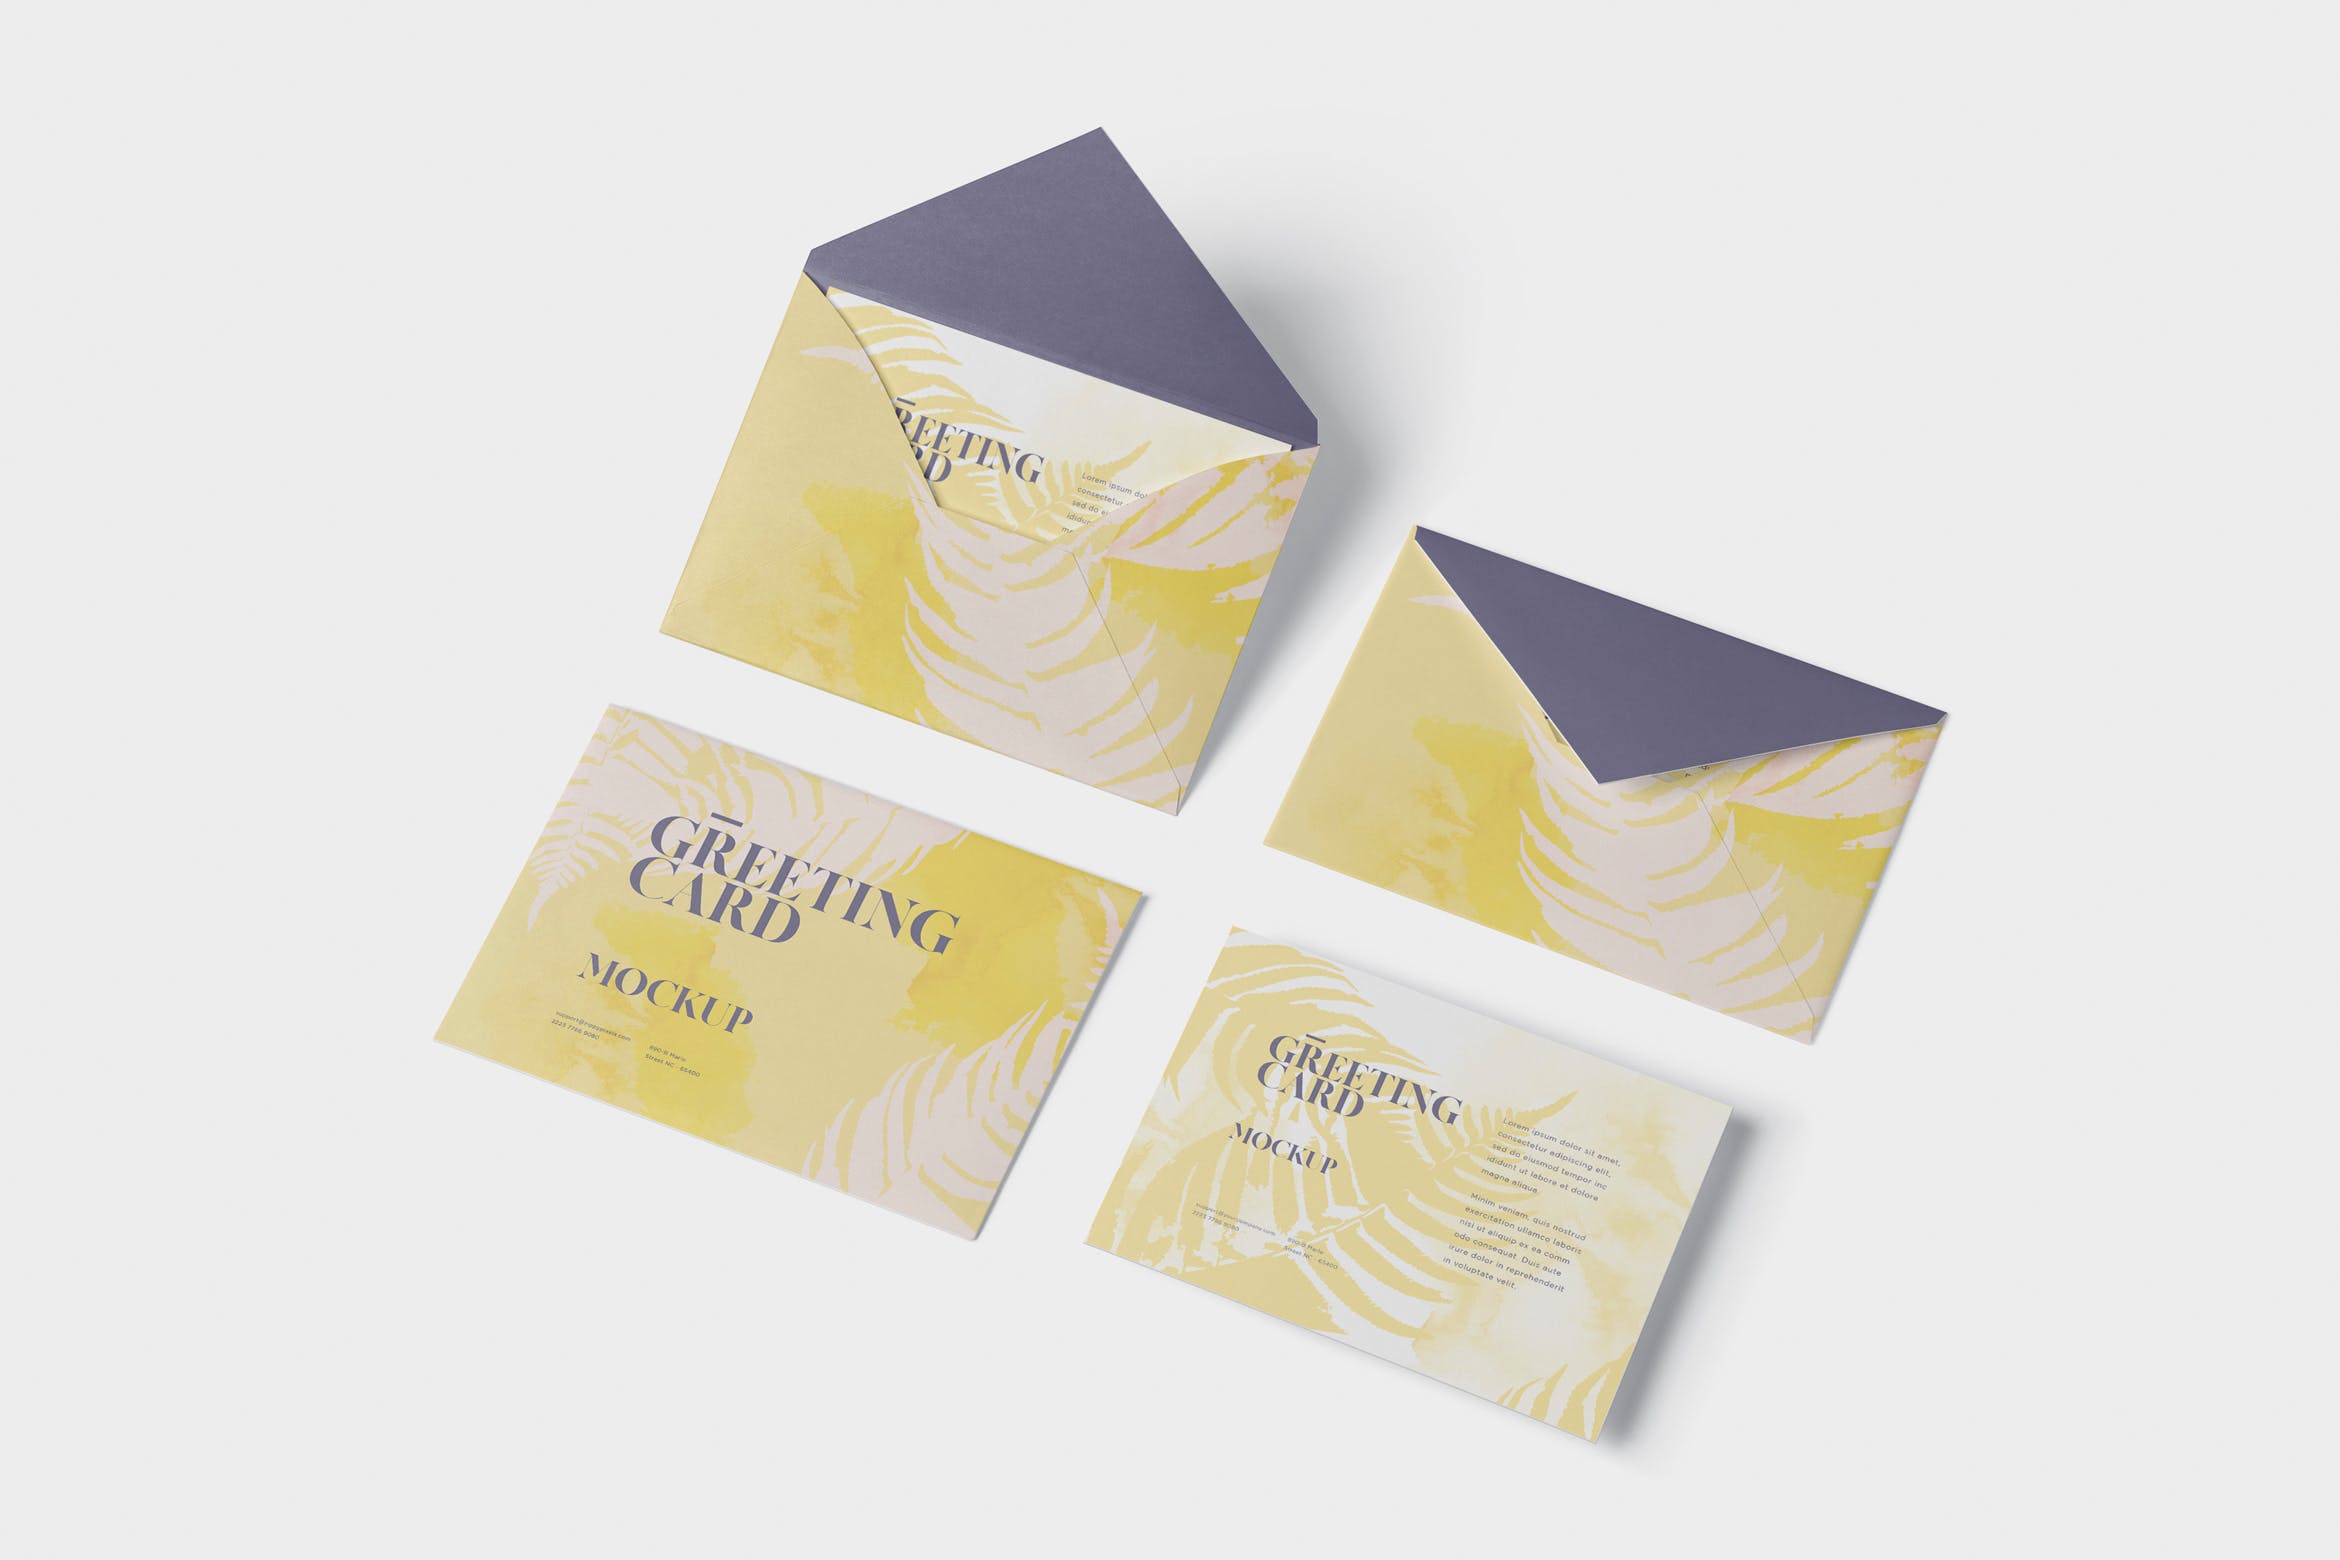 高端企业信封&贺卡设计图第一素材精选 Greeting Card Mockup with Envelope – A6 Size插图